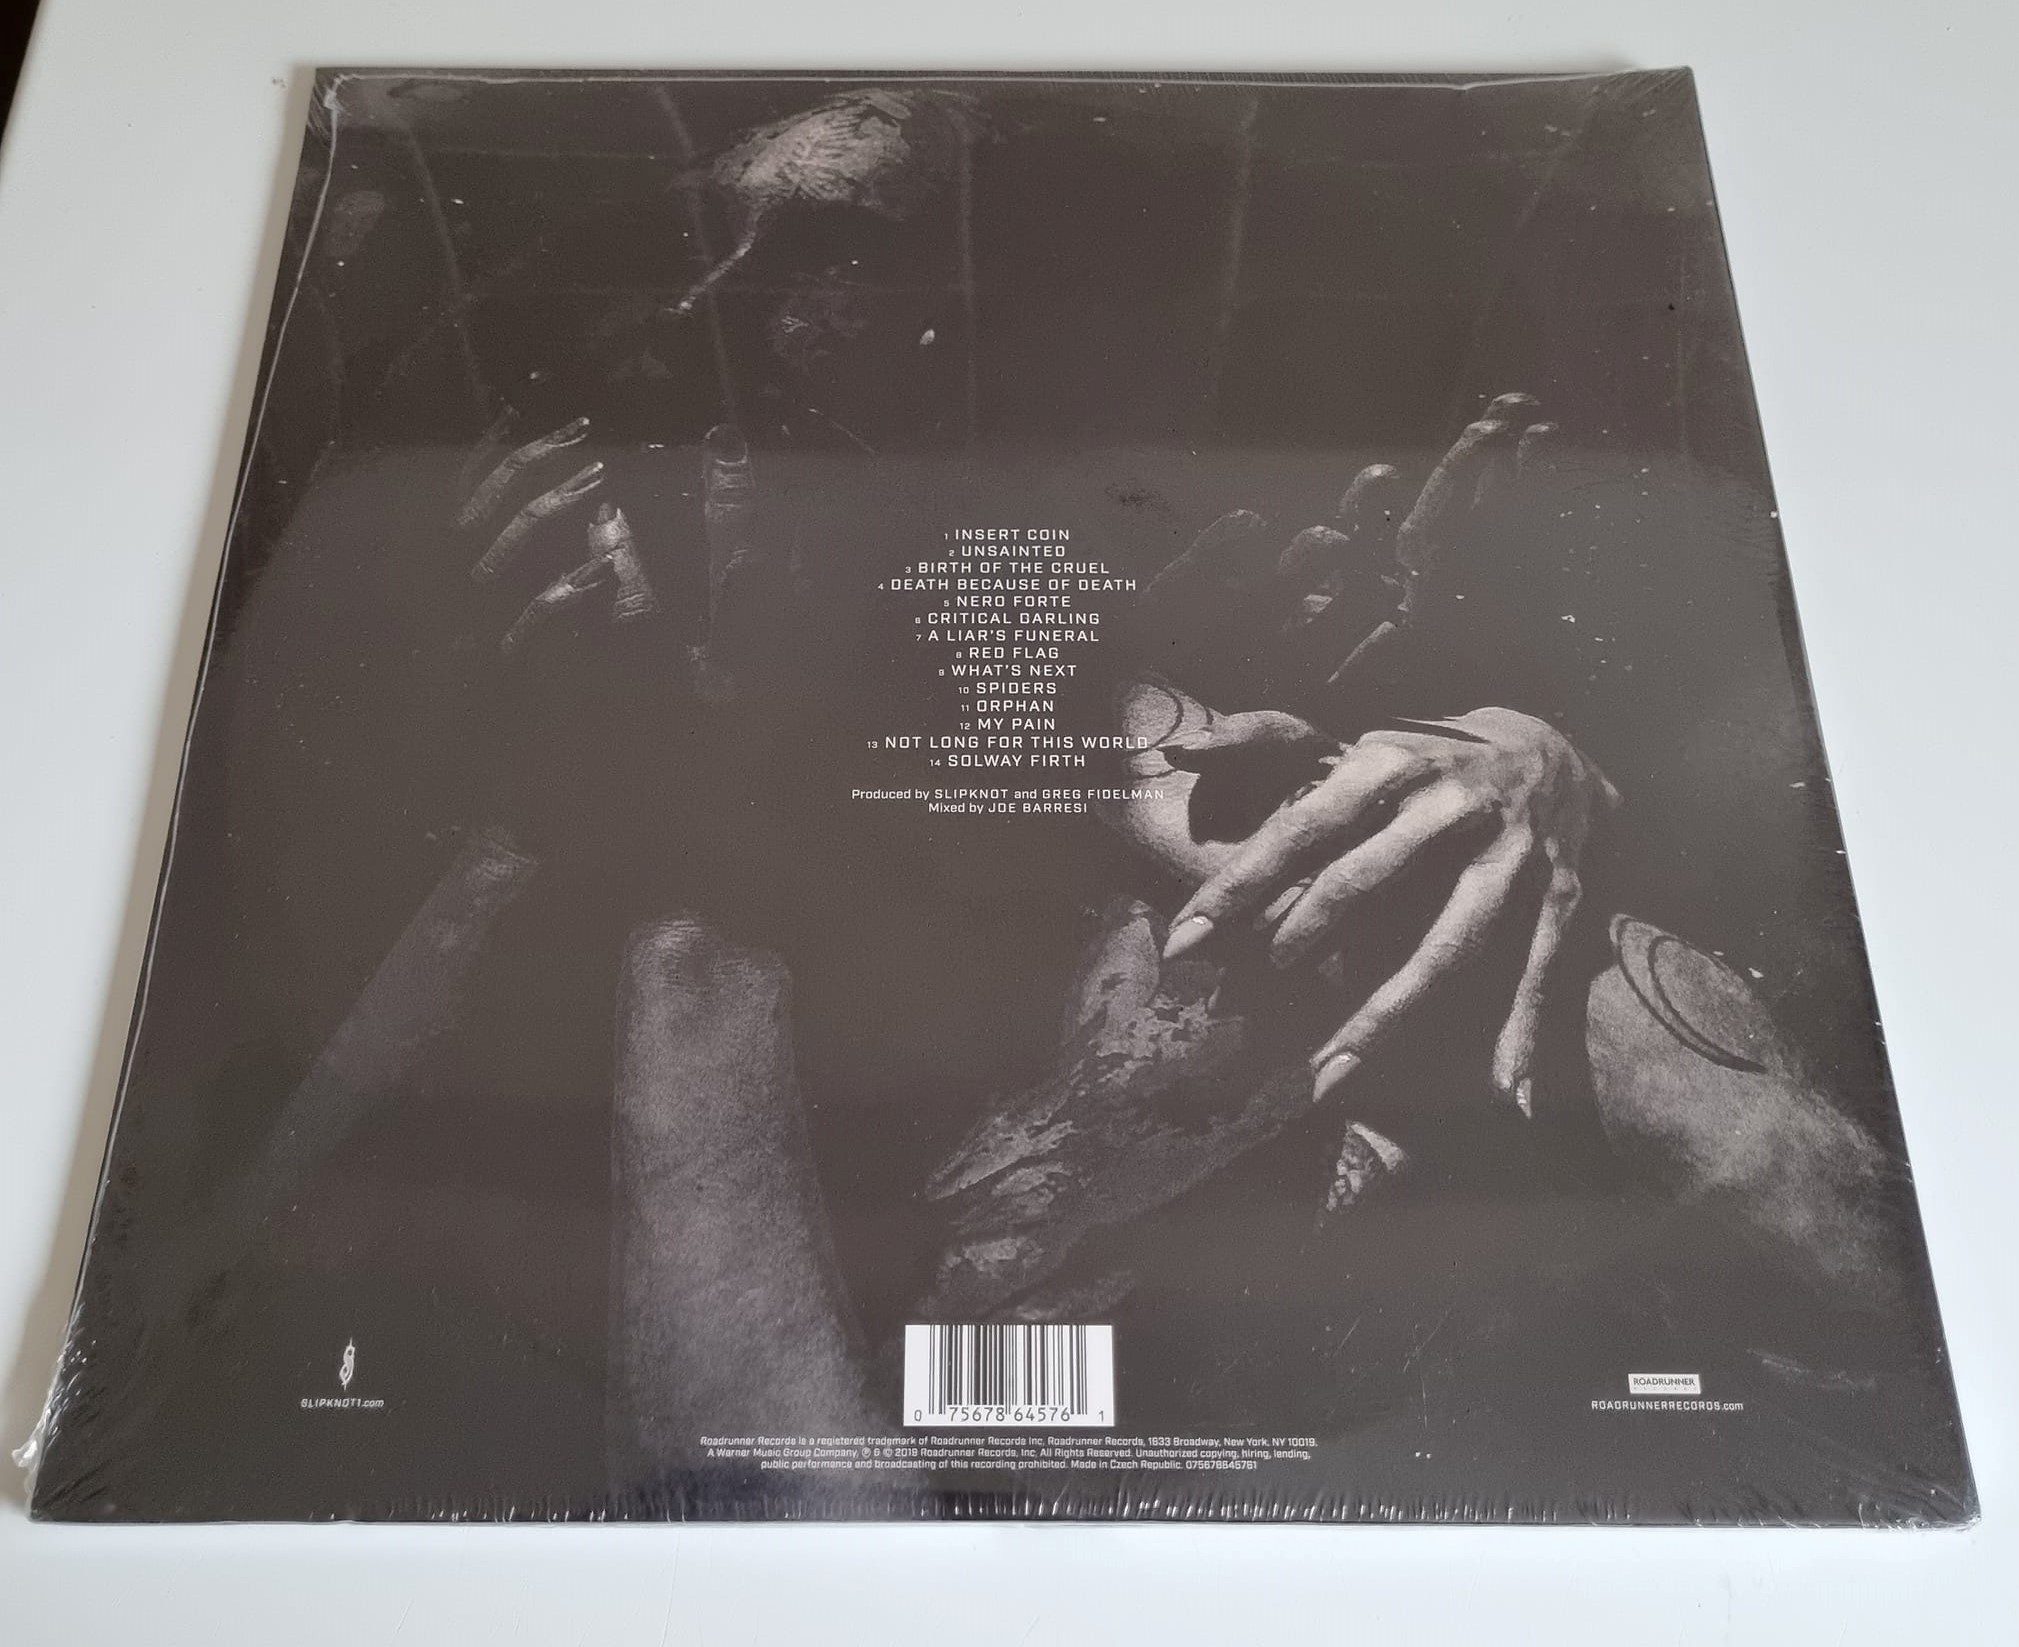 Slipknot - We Are Not Your Kind [New Vinyl LP] Colored Vinyl, Light Blue  75678645761